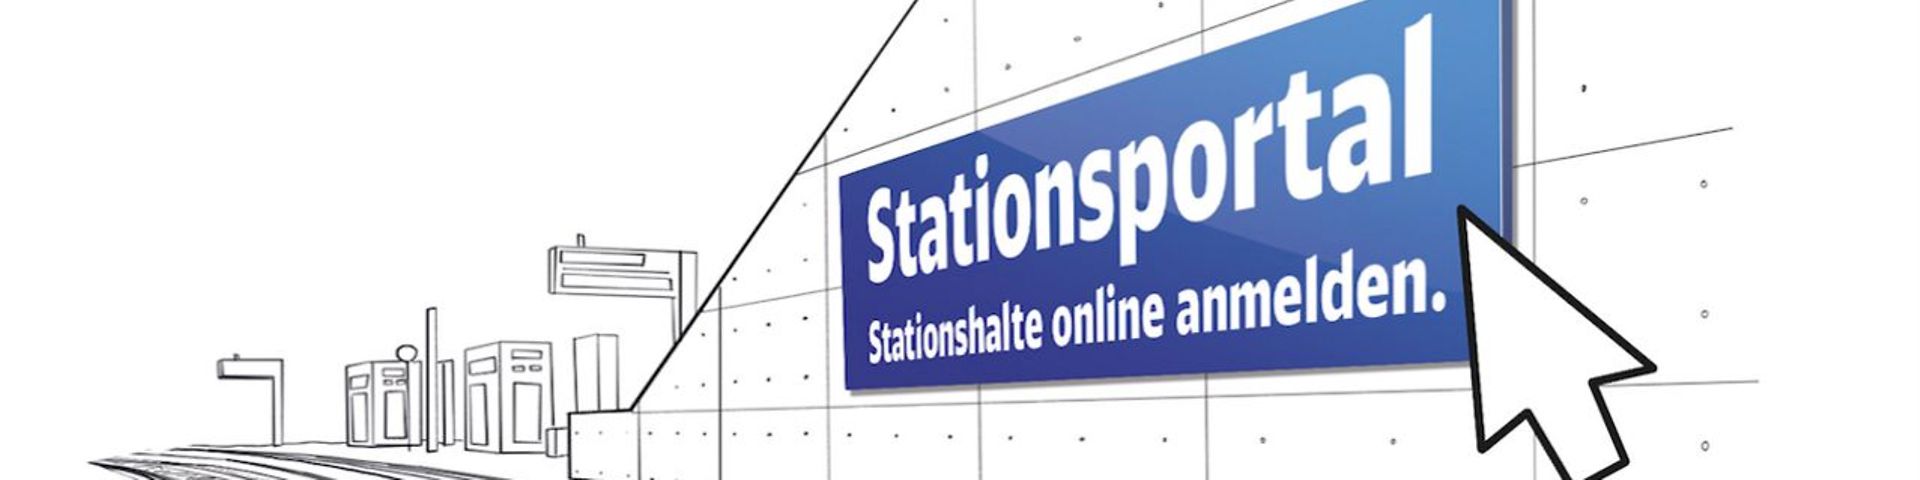 Stationsportal